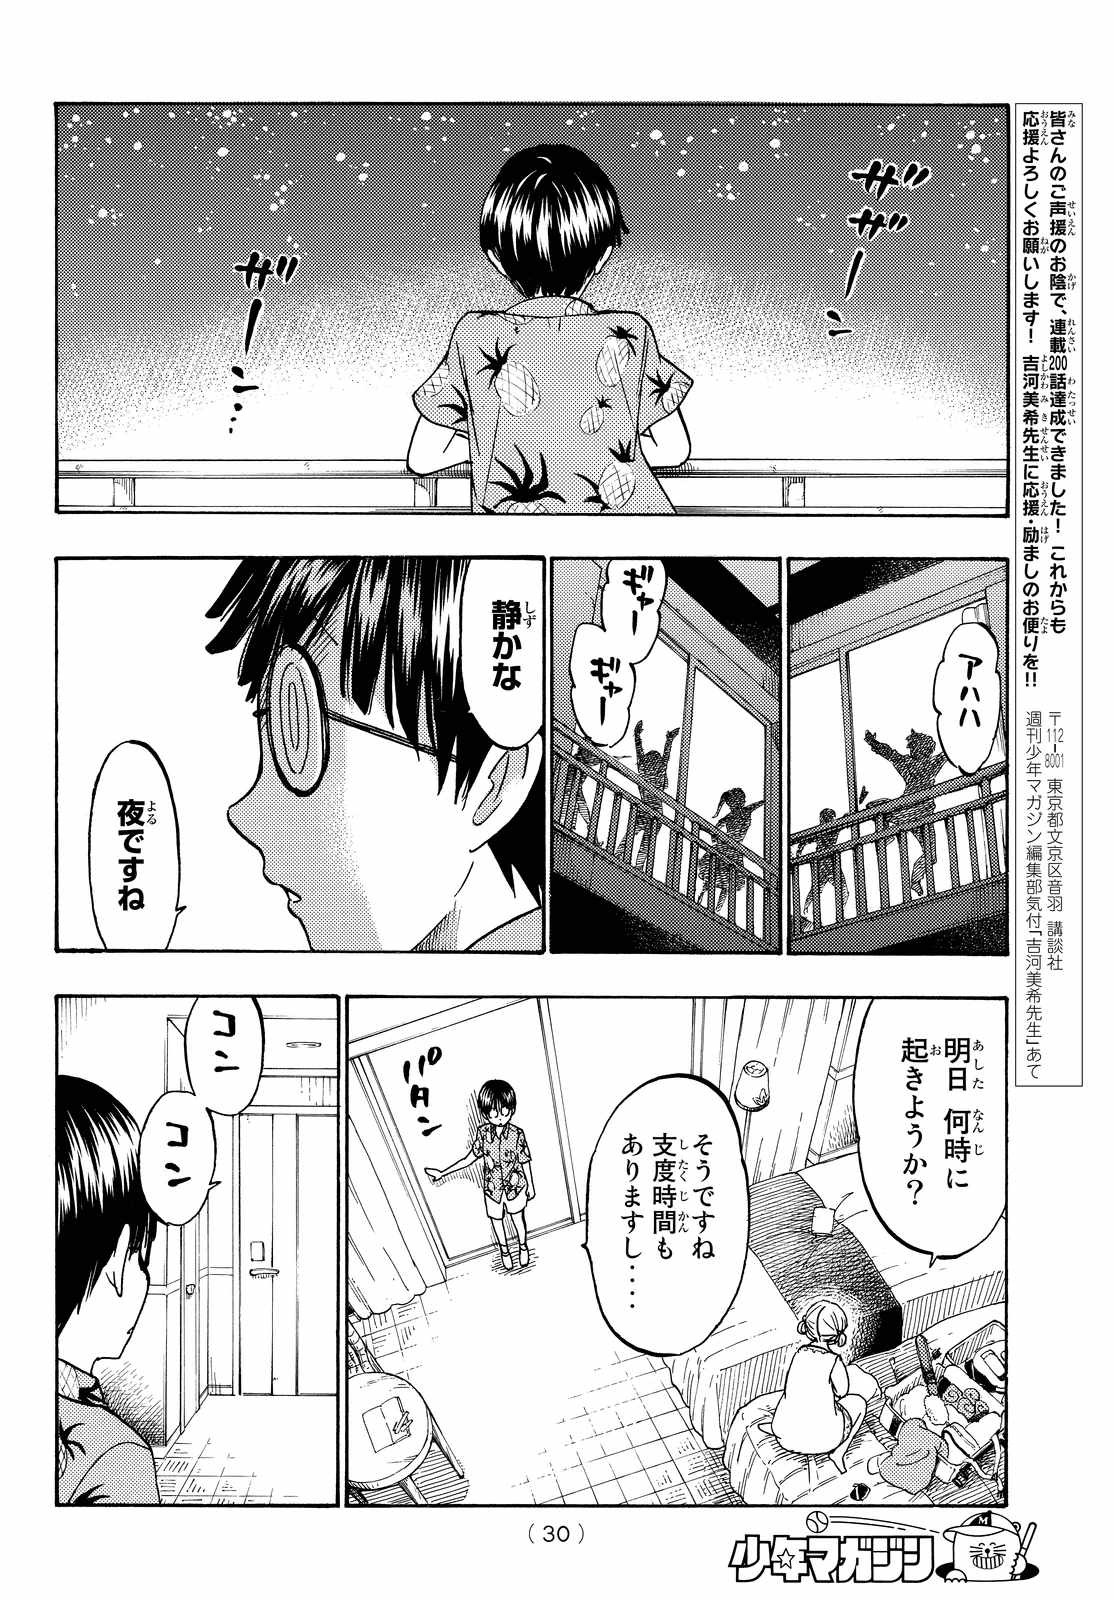 Yamada-kun to 7-nin no Majo - Chapter 200 - Page 22